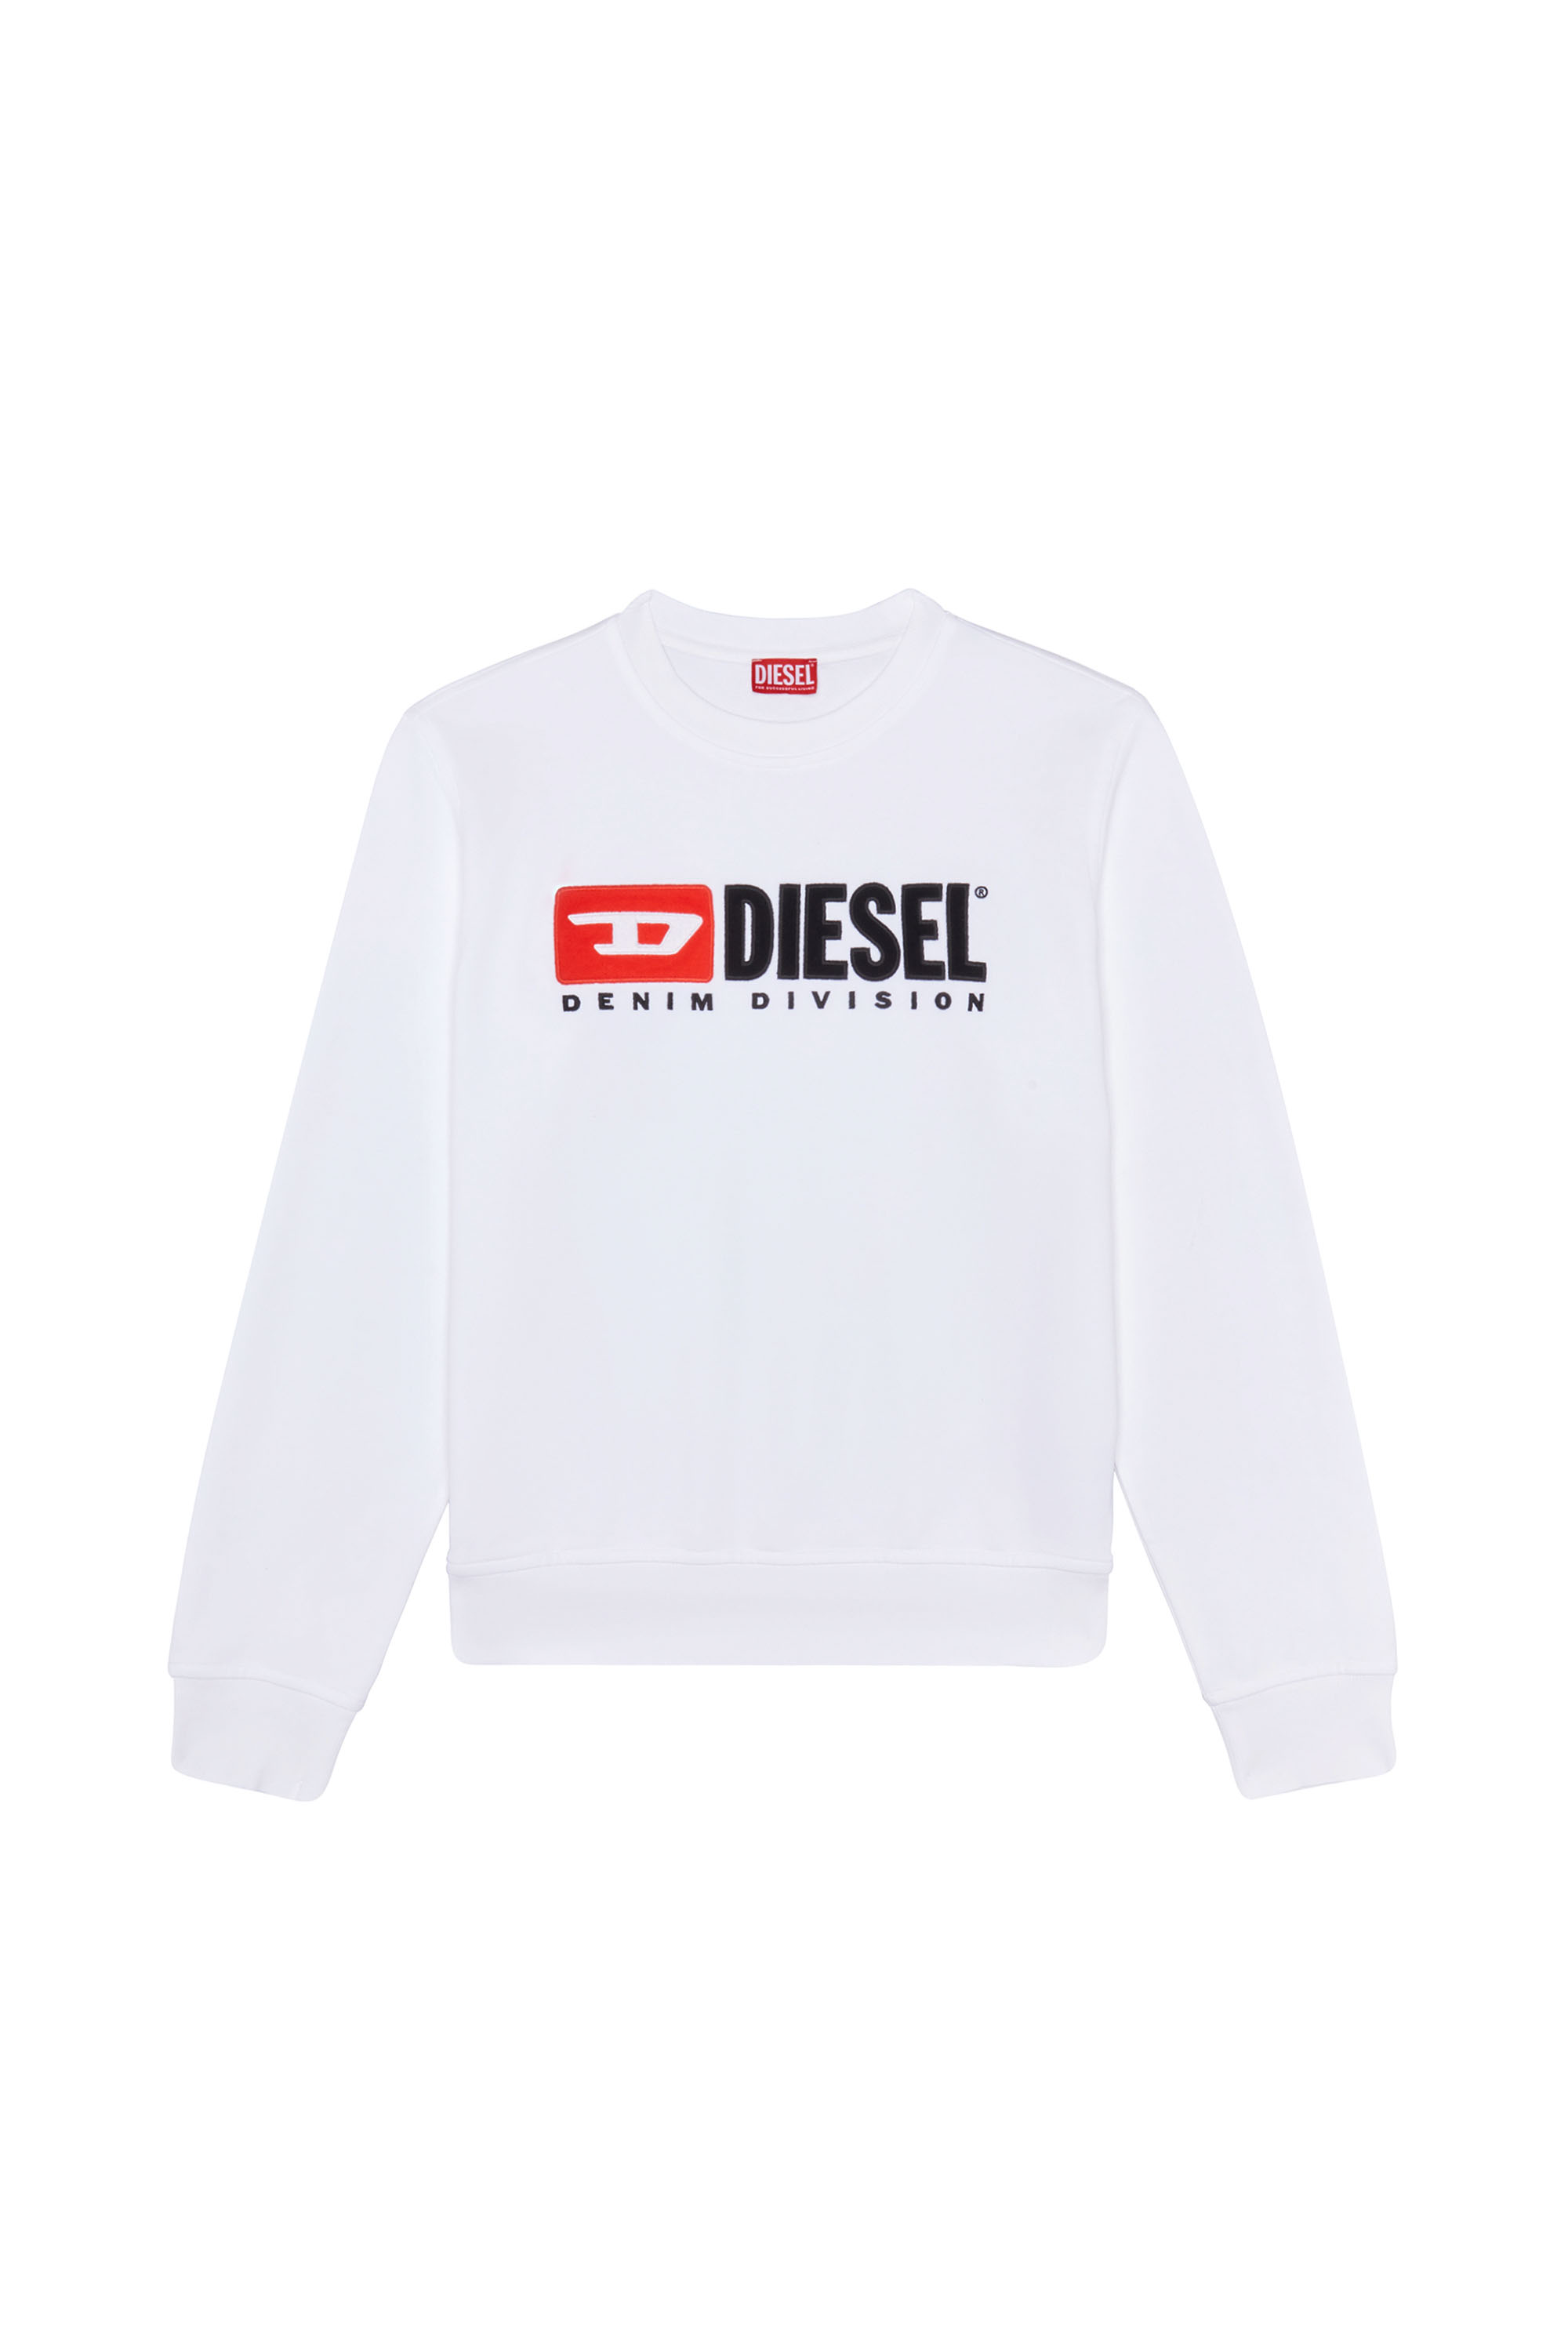 Diesel - S-GINN-DIV, White - Image 1